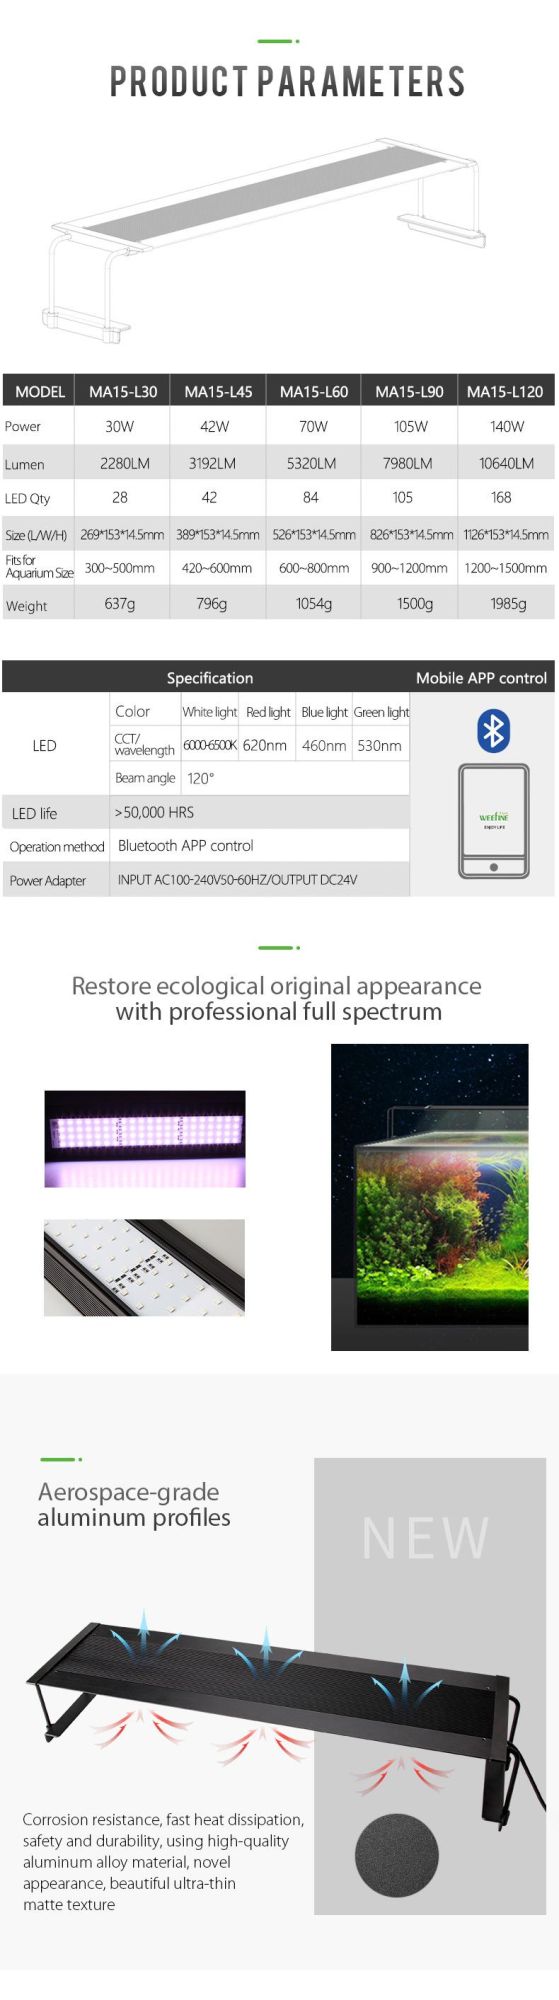 OEM&ODM New Design LED Aquarium Light for Fish Tank with Sunset and Sunrise Mode (MA15)